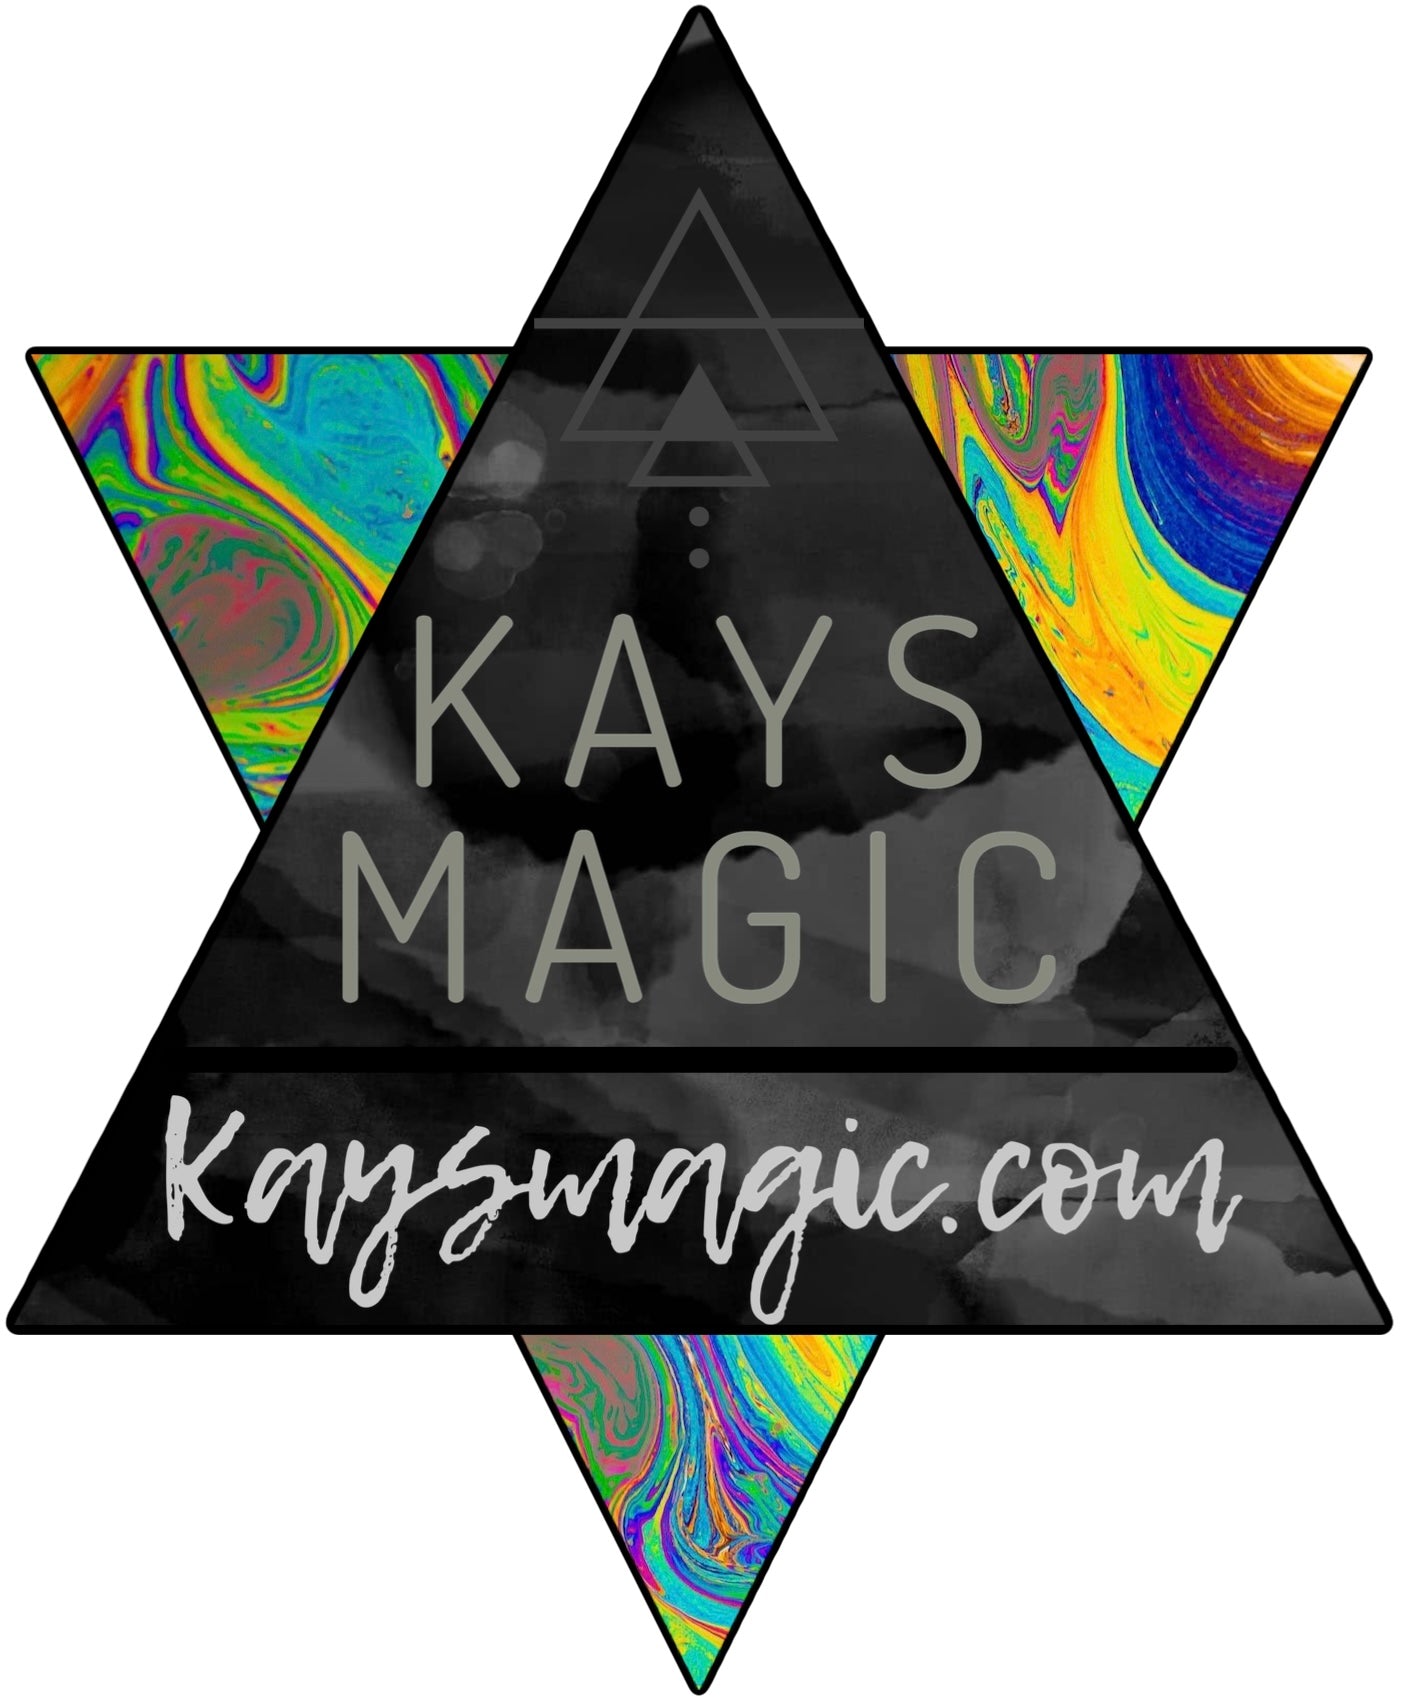 Kays Magic